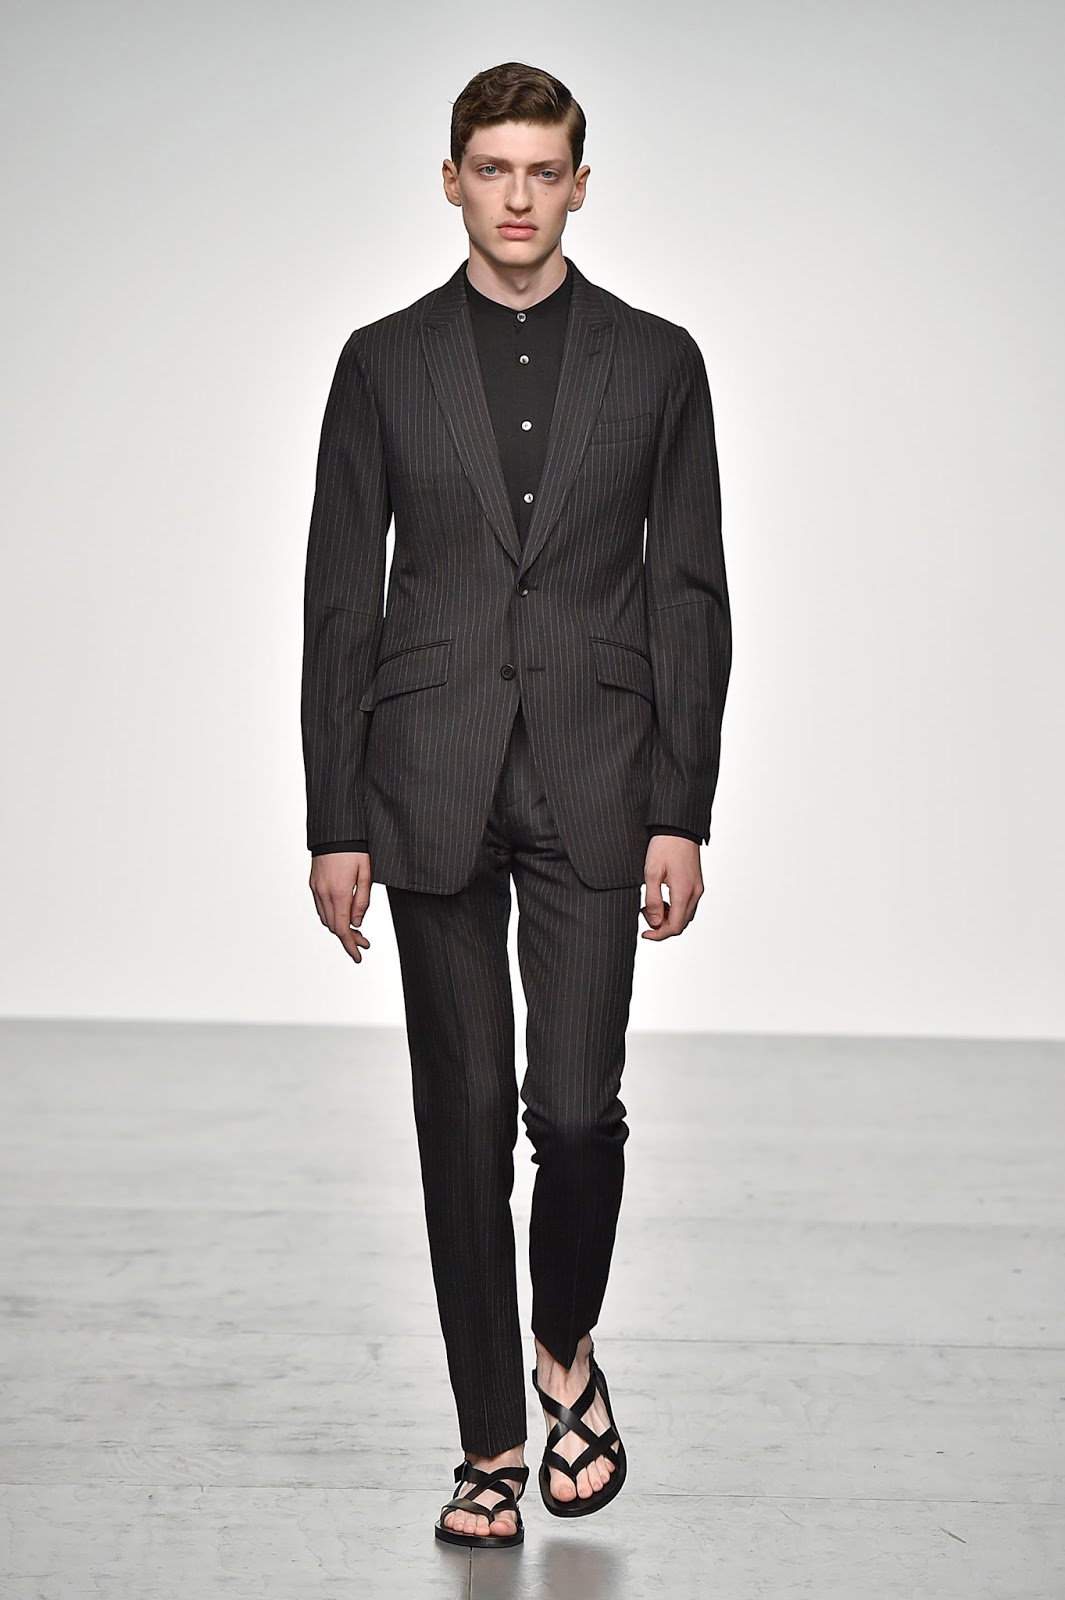 men's styling: Songzio SS18 Menswear at London Fashion Week: Mens